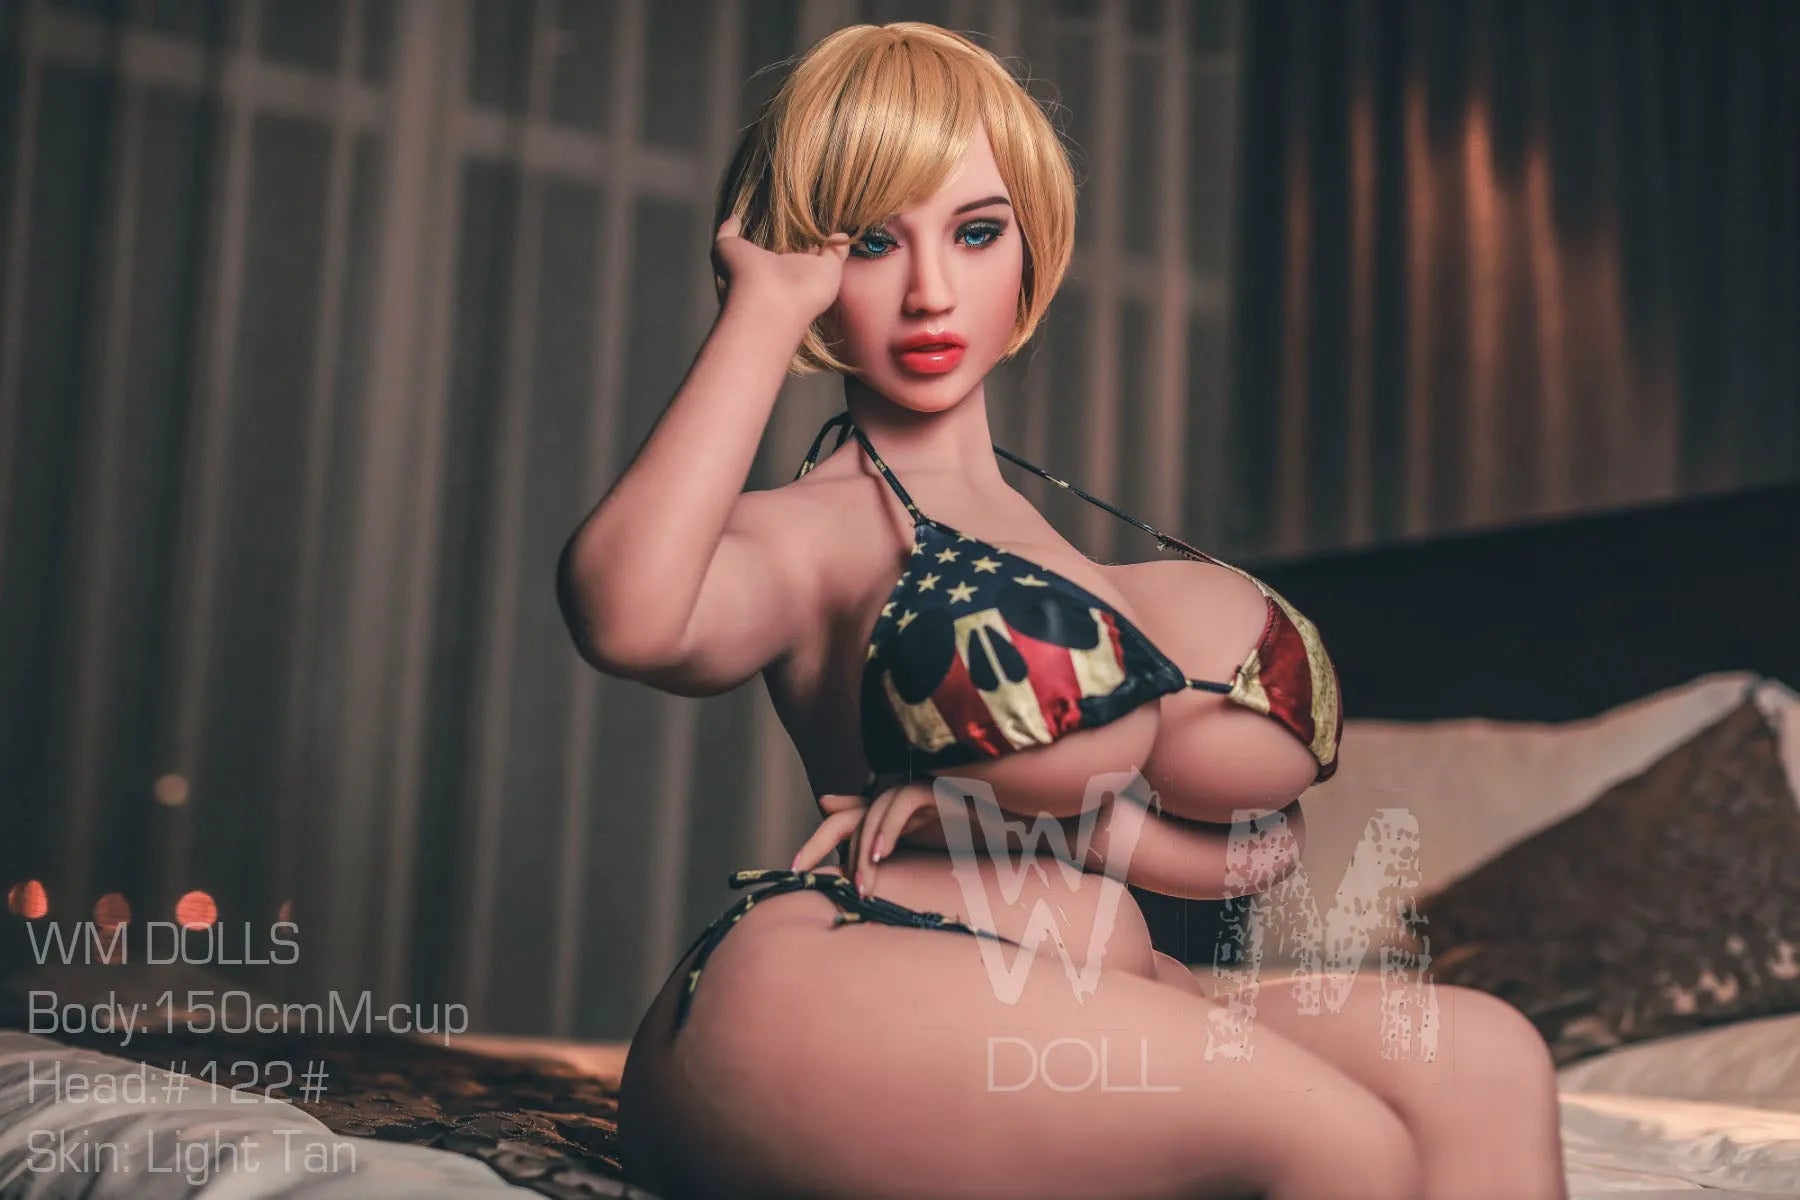 In Stock 4ft11/150cm M Cup Realistic BBW Sex Dolls – WM Doll Harper